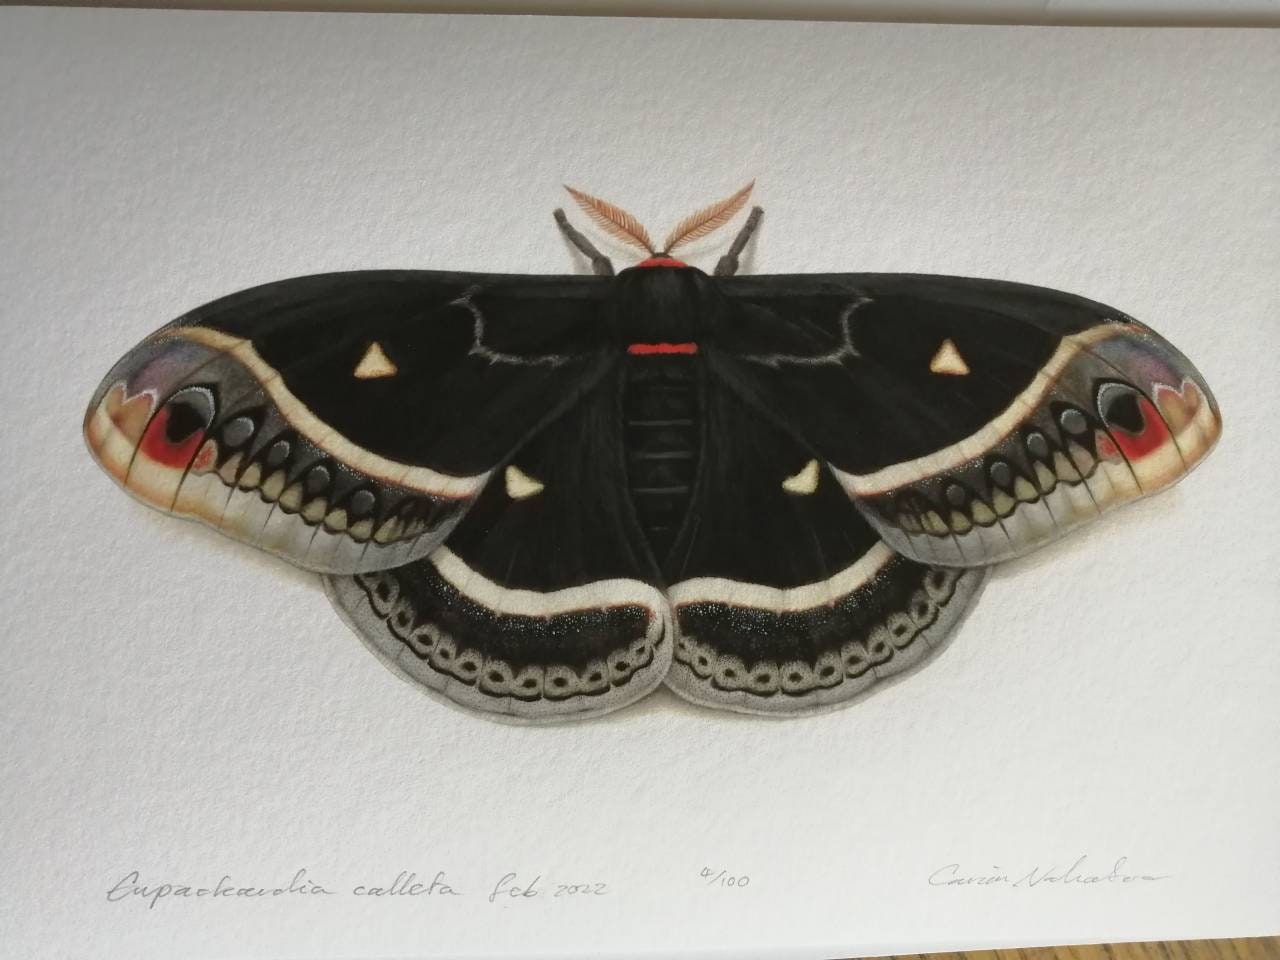 Eupackardia calleta silk moth limited edition art print, A4 size